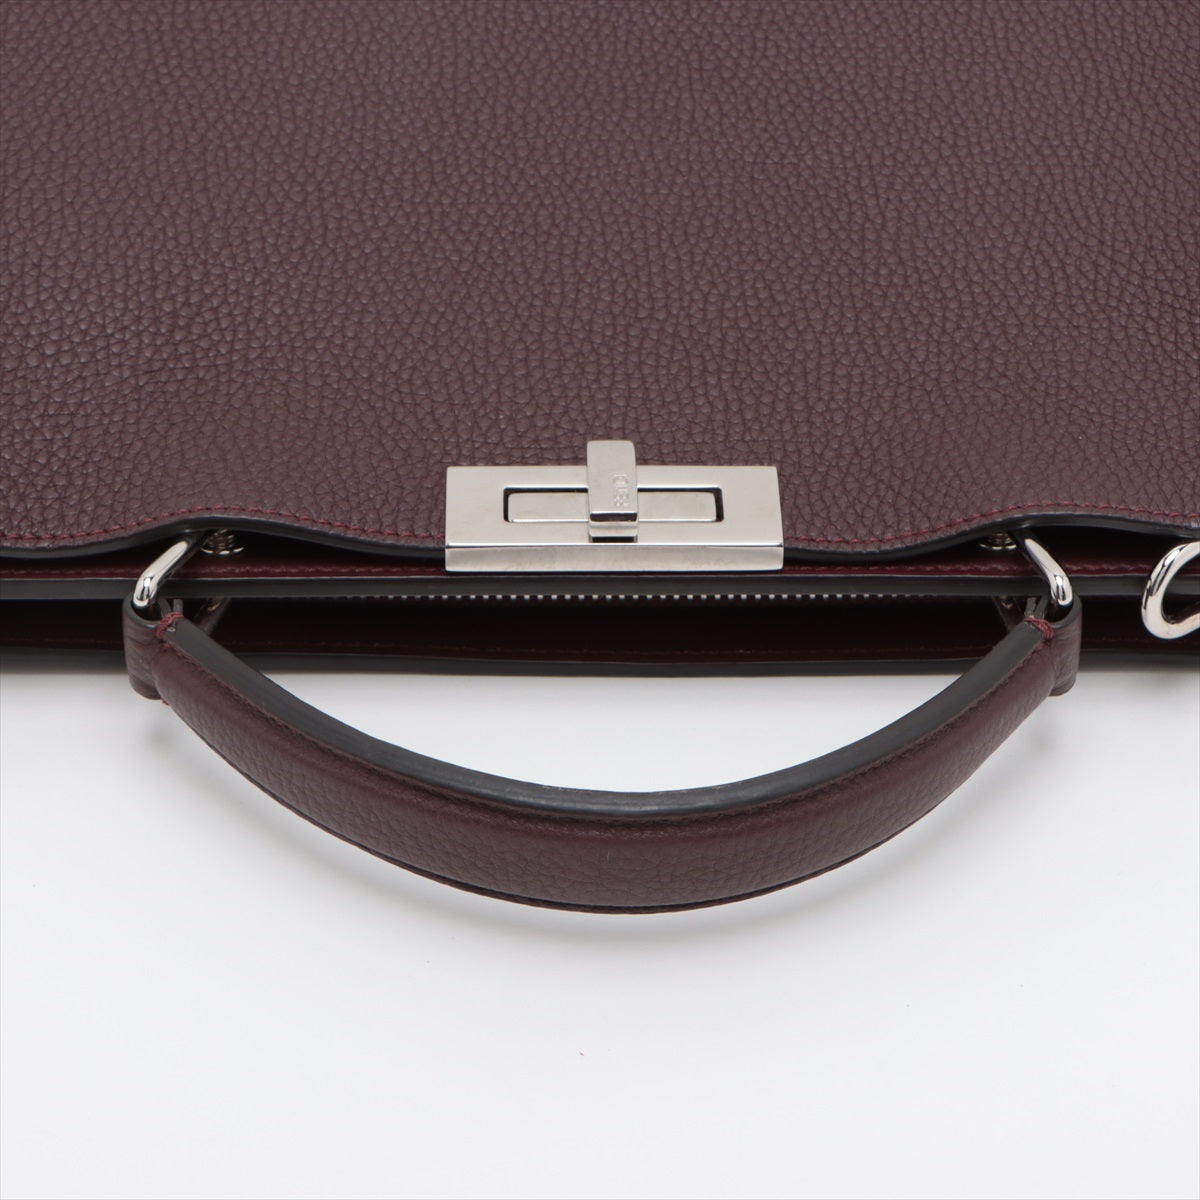 Fendi Peek-a-boo ICU Co., Ltd. midium Leather 2way handbag Wine red 7VA529